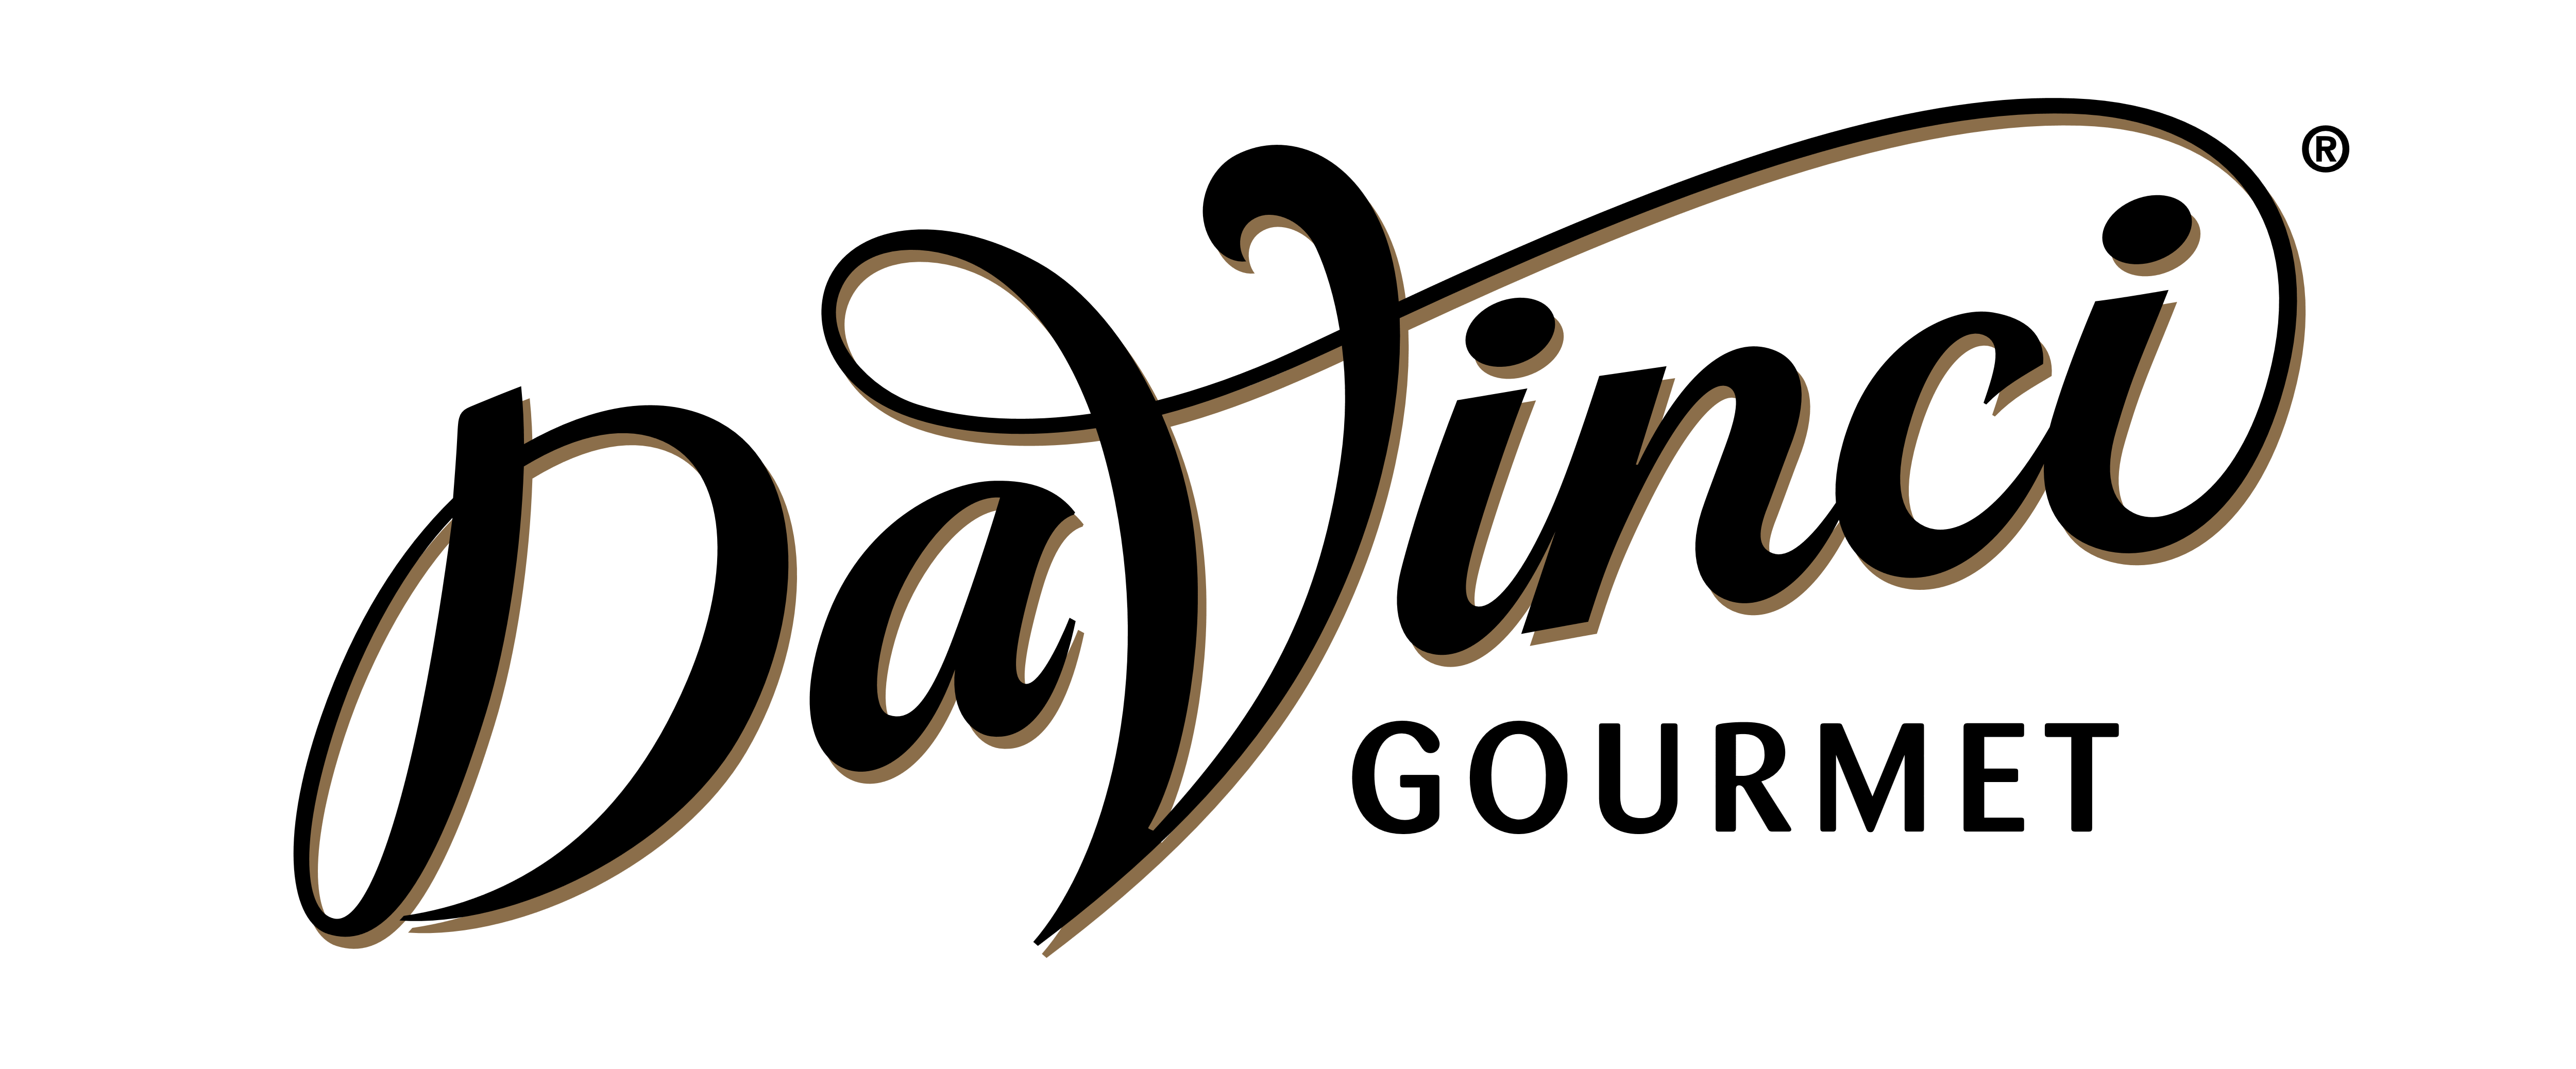 DaVinci Logo - Davinci Gourmet – Logos Download